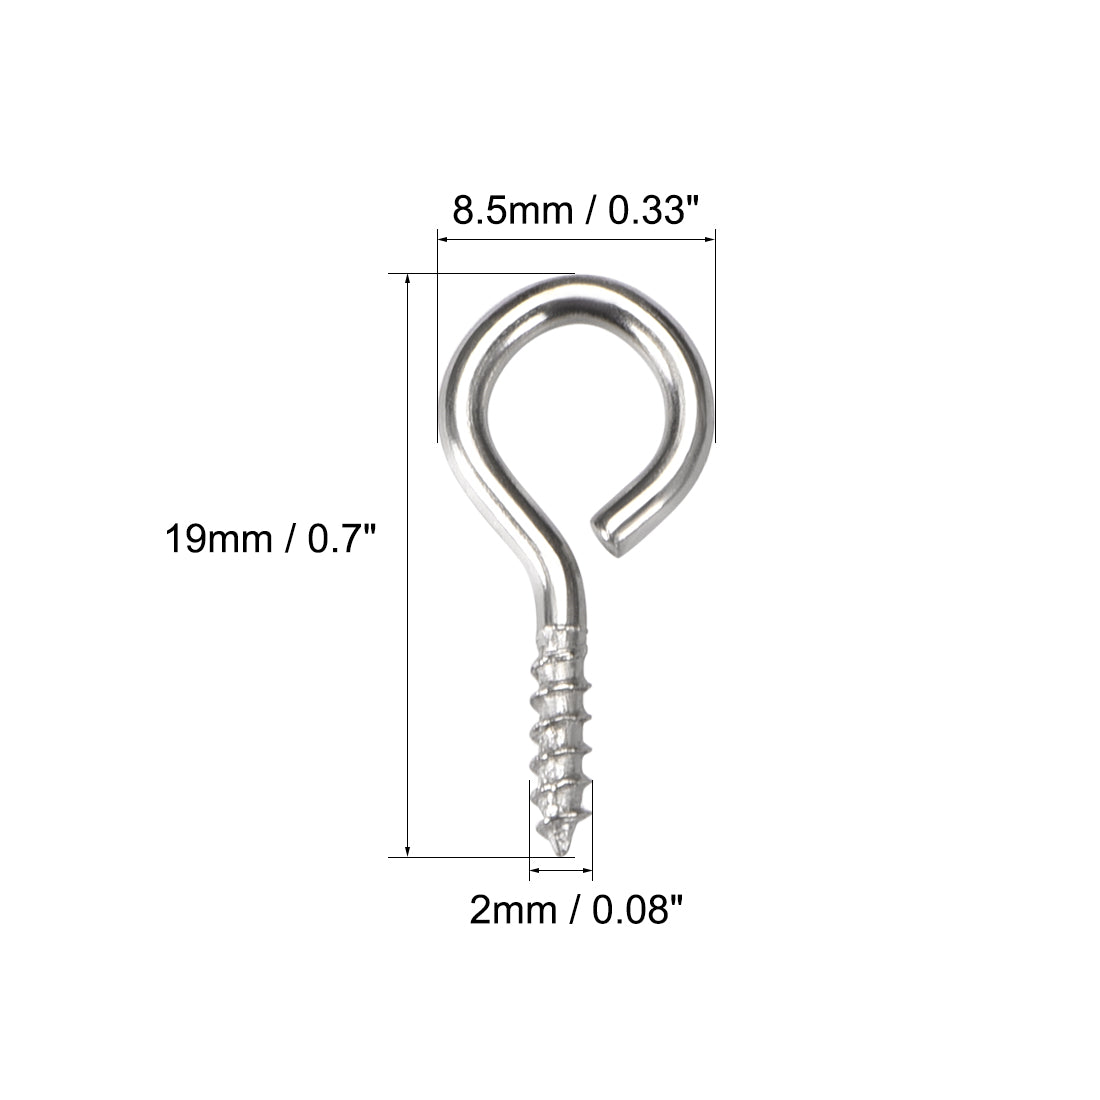 uxcell Uxcell 0.7" Small Screw Eye Hooks Self Tapping Screws Carbon Steel Screw-in Hanger Eye-Shape Ring Hooks Silver 100pcs